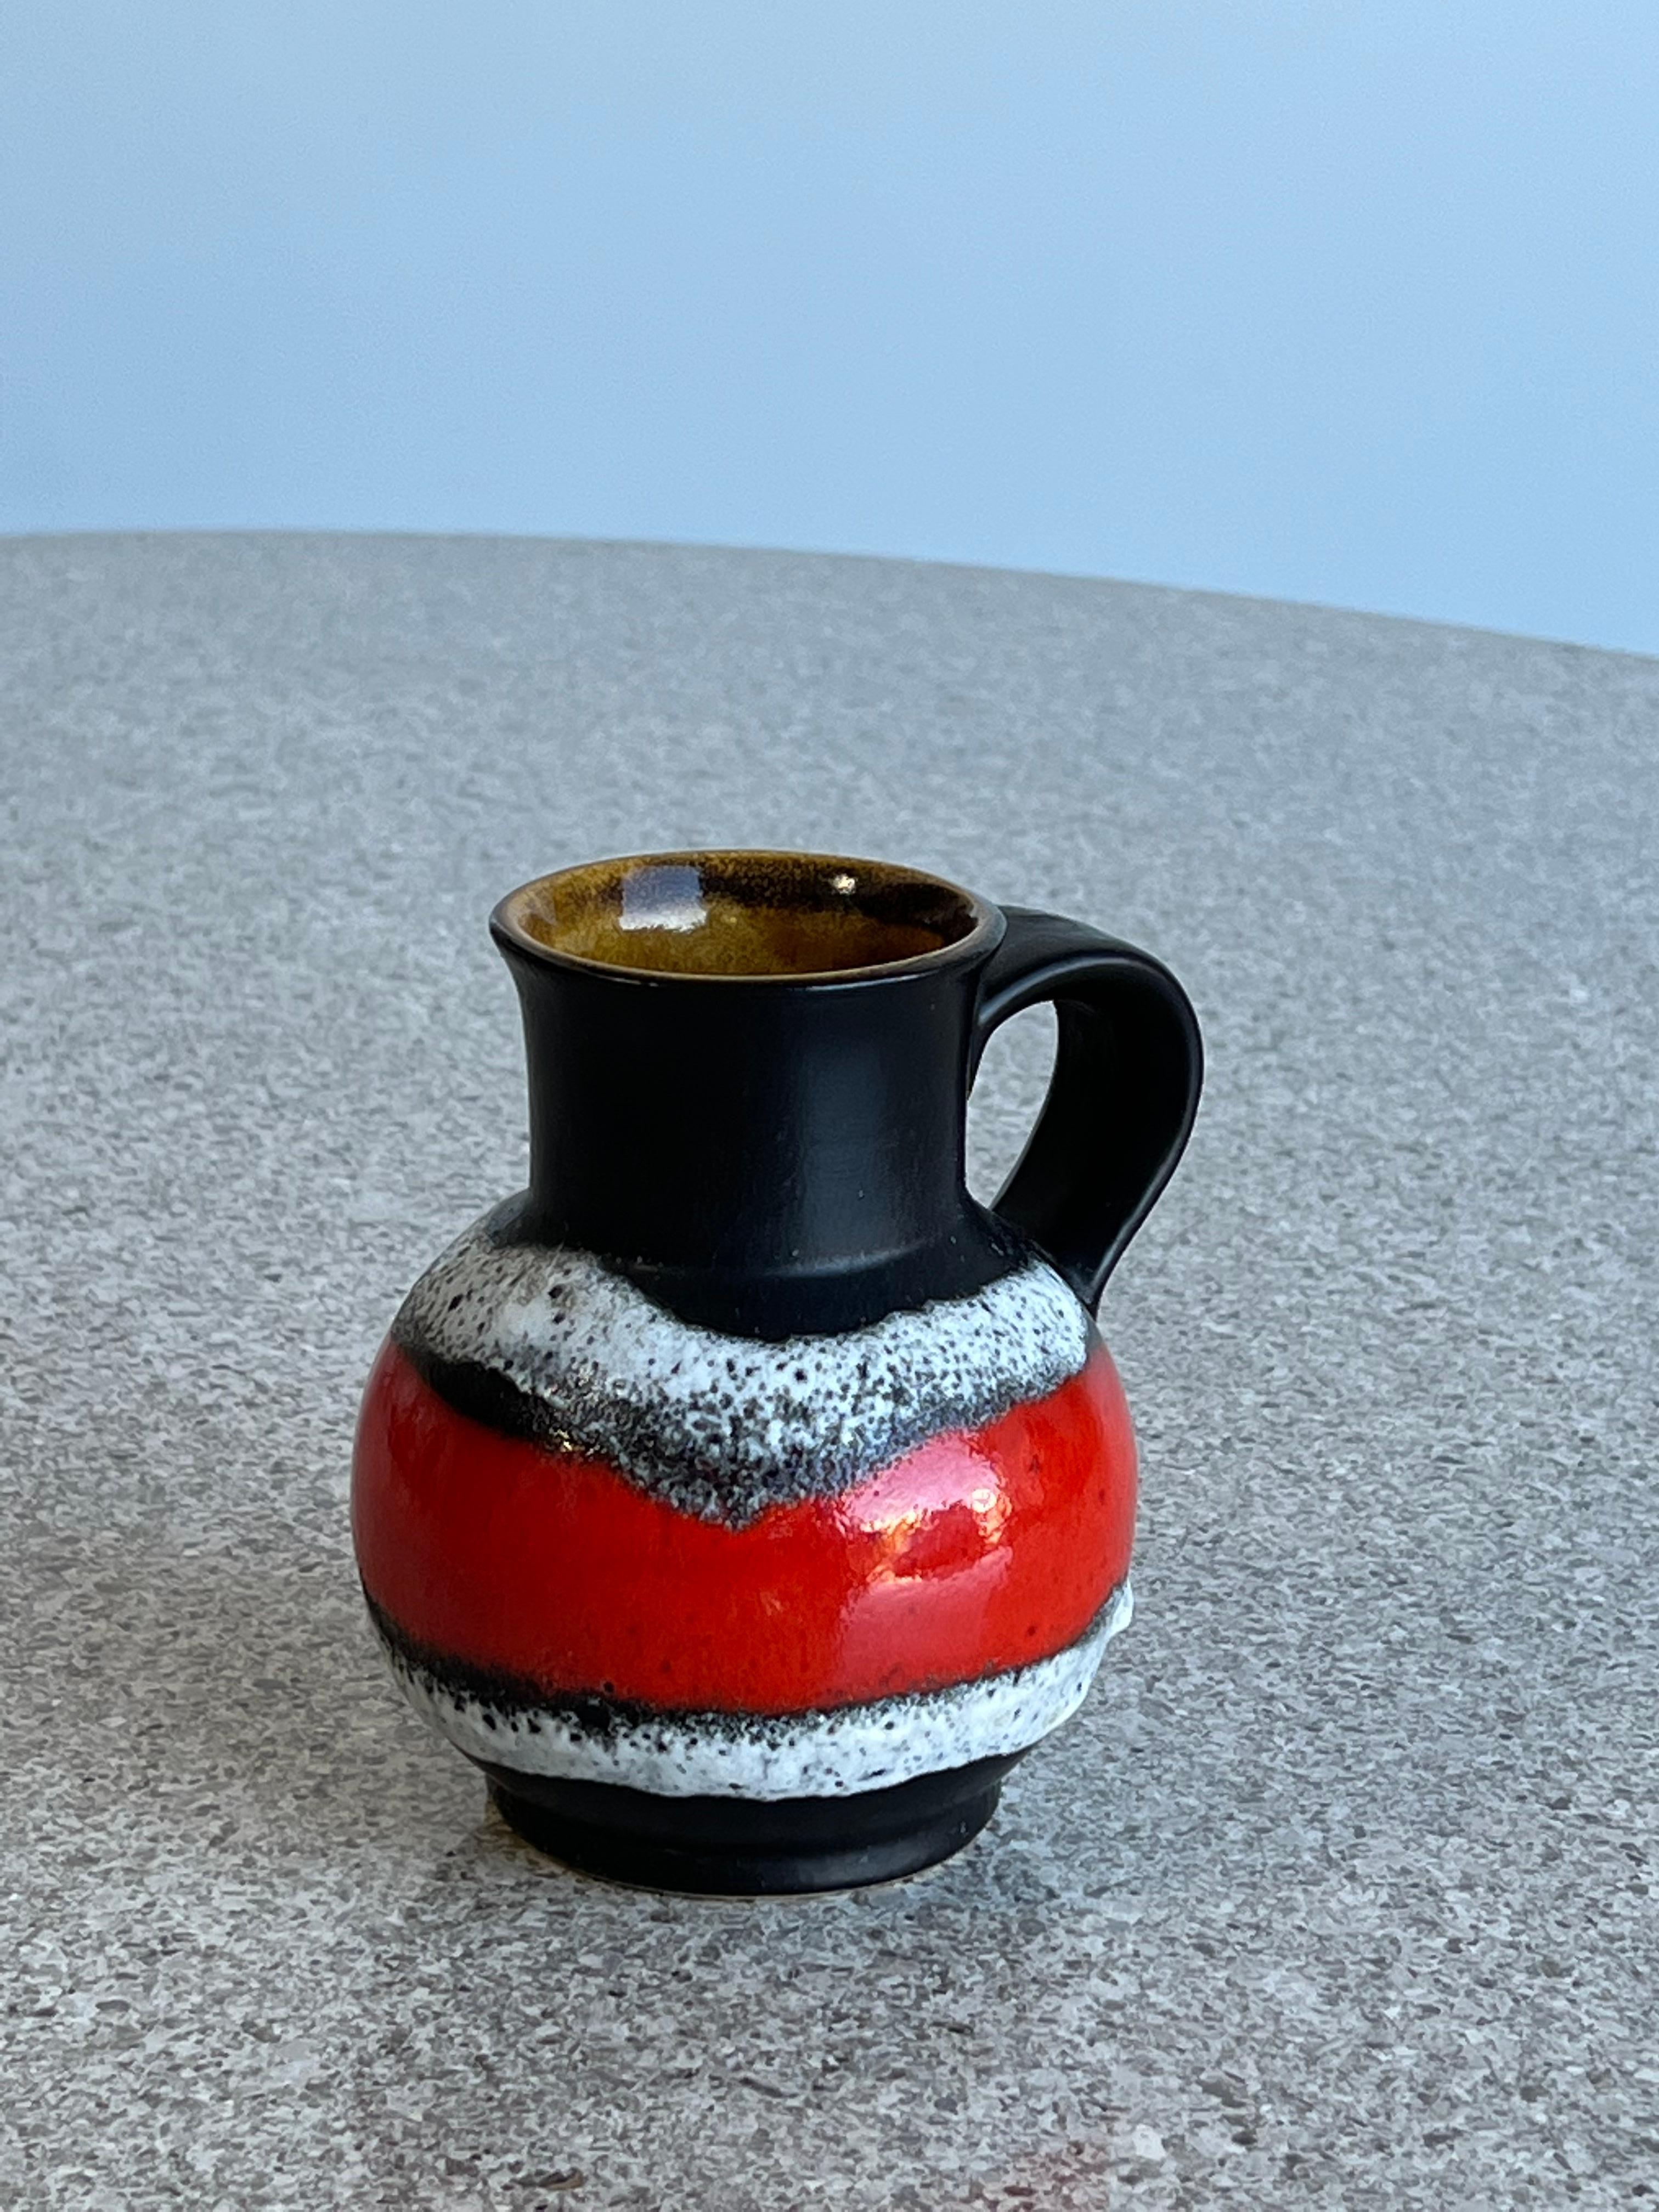 West German glazed ceramic vase in red and black 1960s.
Water jar by West German stamped on the bottom.
   